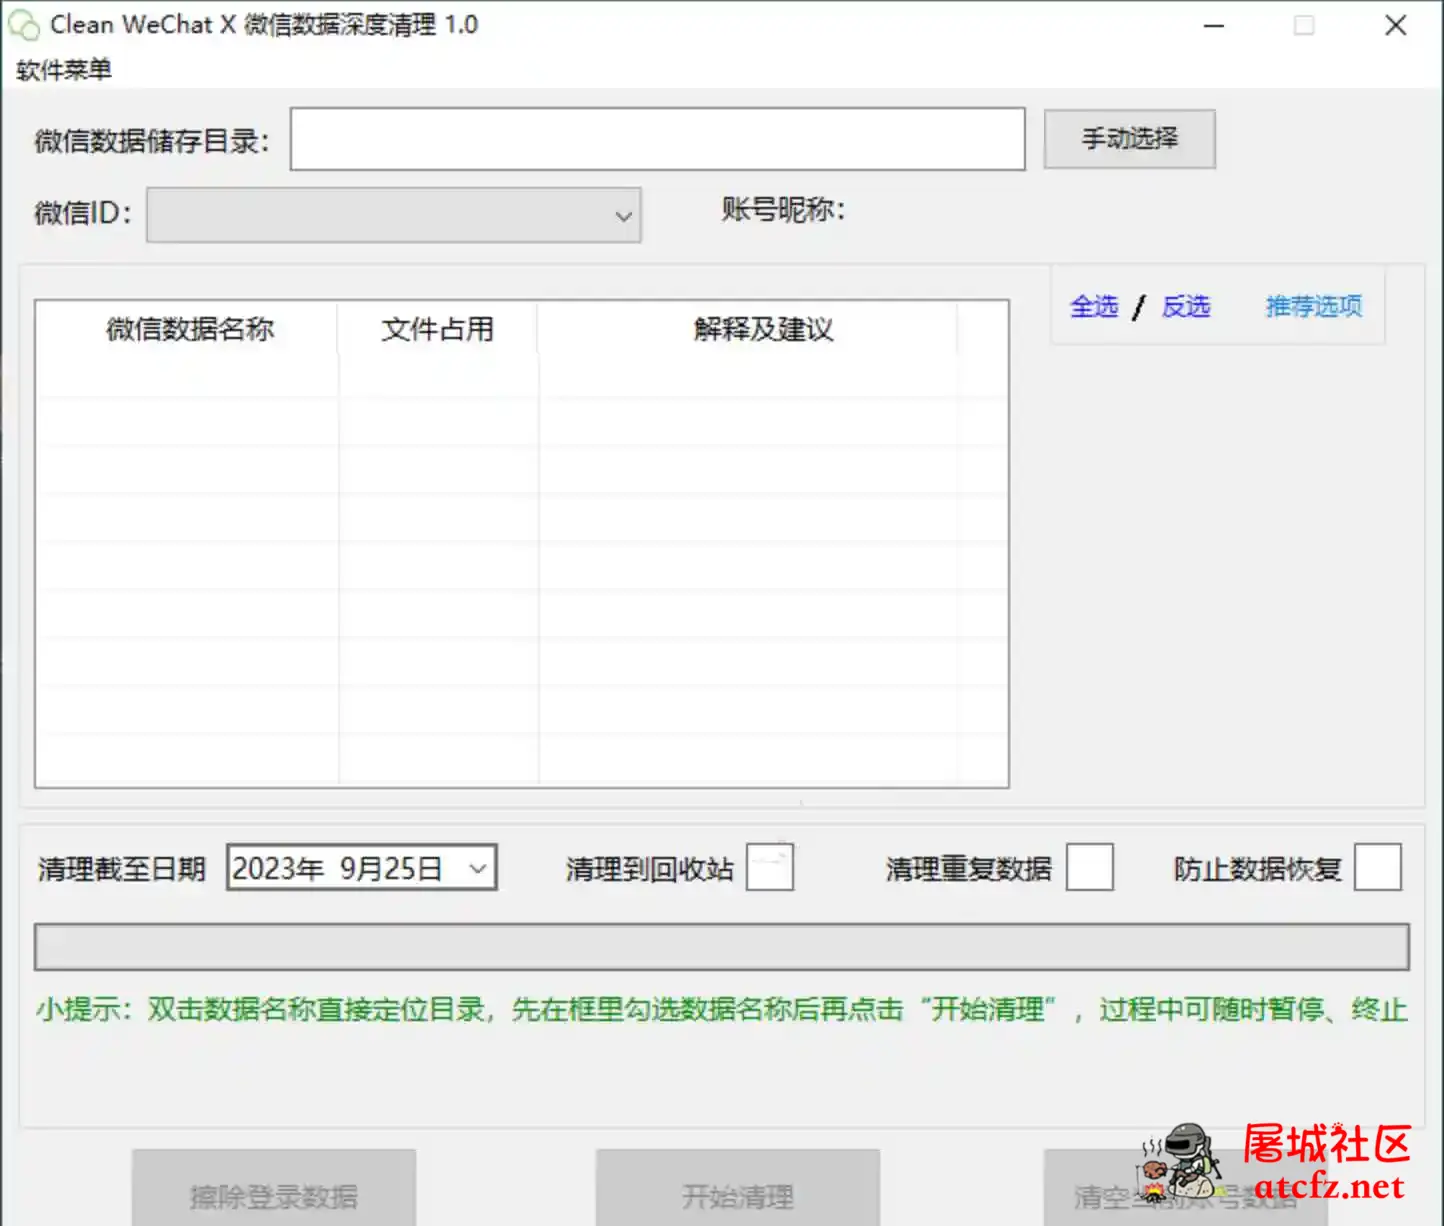 Clean WeChat X微信深度清理v3.0微信数据深度清理软件 屠城辅助网www.tcfz1.com7693